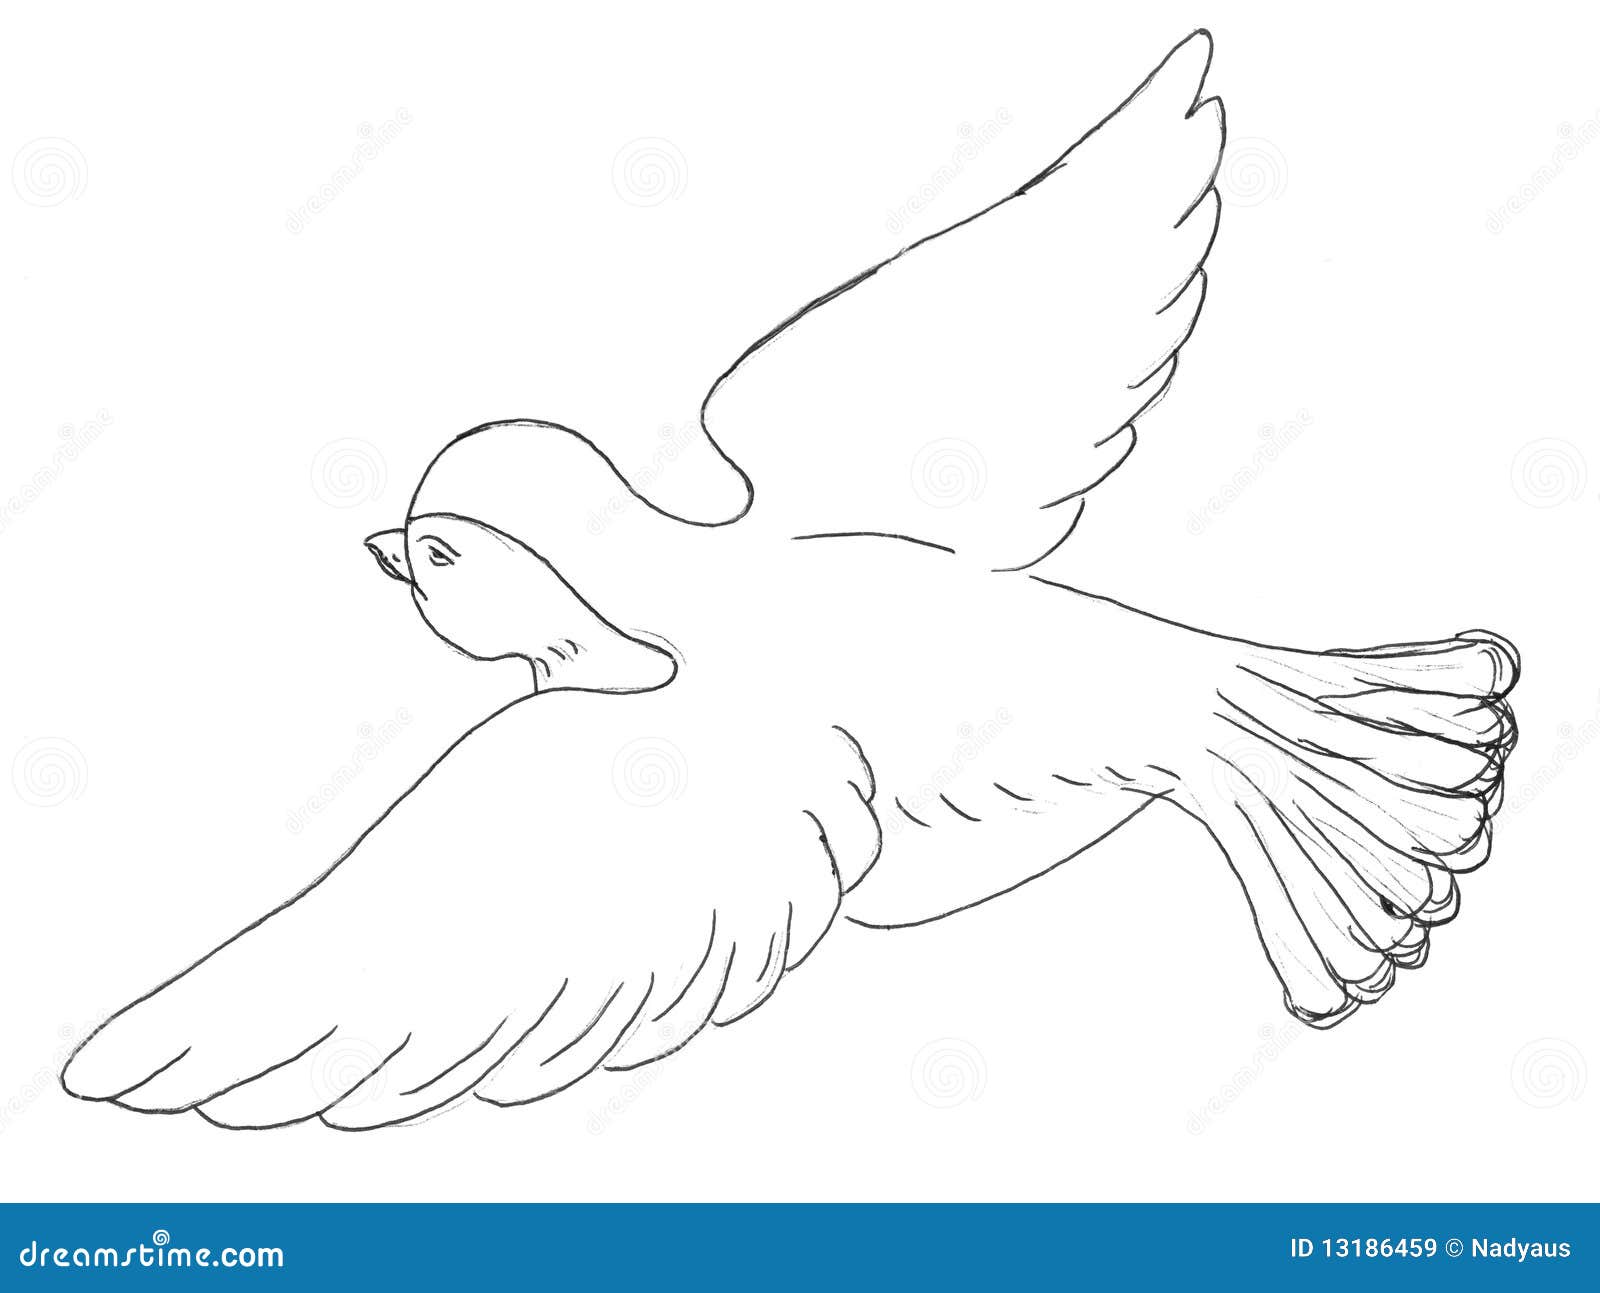 Sparrow bird sketch, pencil drawing of flying bird.